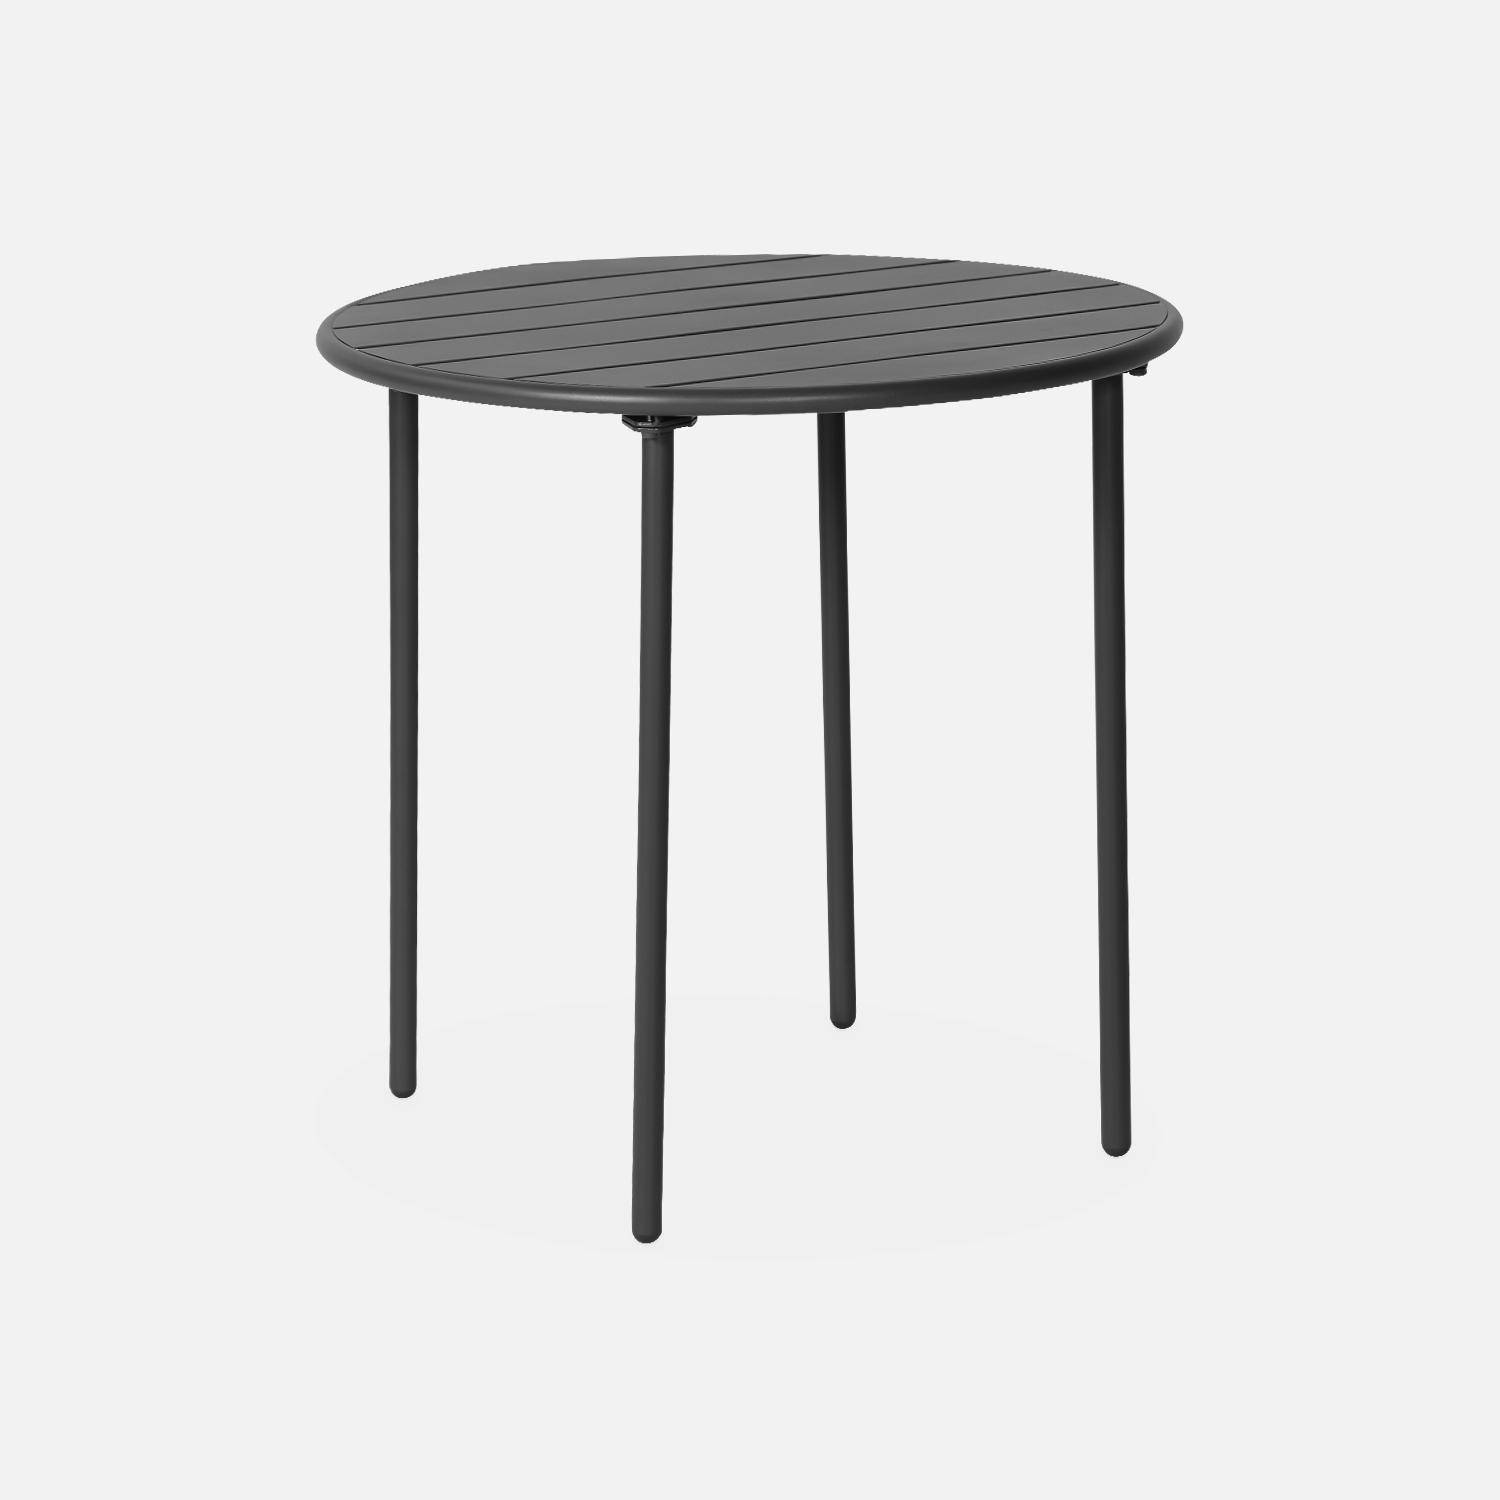 2-seater round steel garden table, Ø75cm - Amelia - Anthracite Photo3